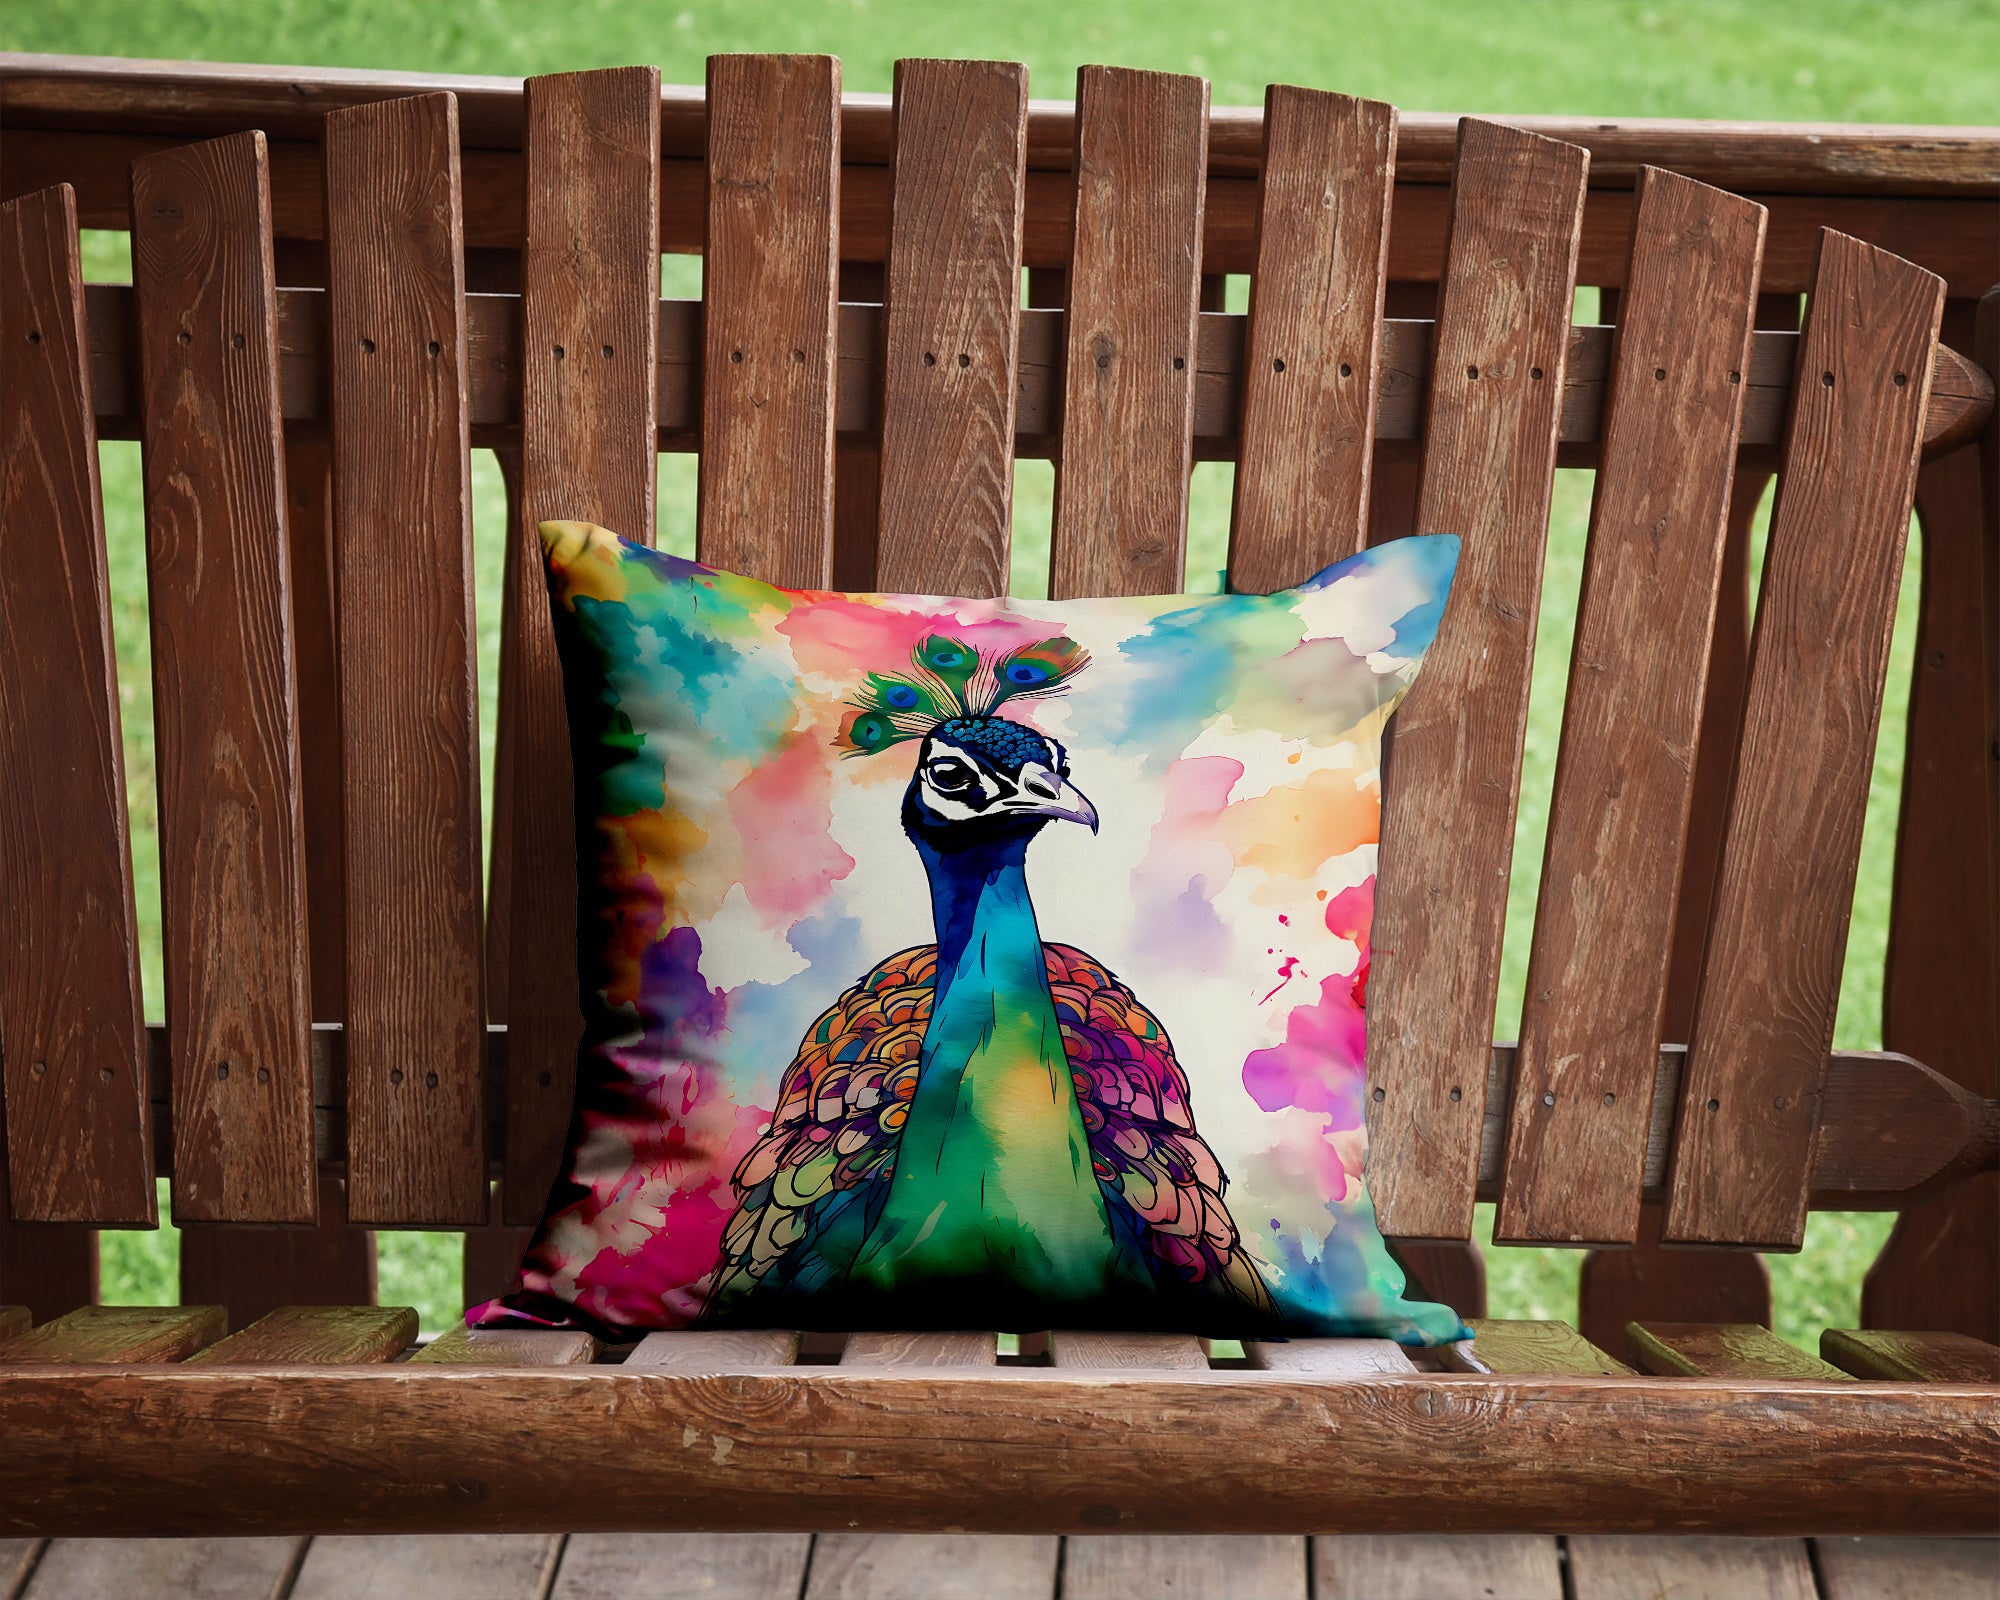 Hippie Animal Peacock Throw Pillow